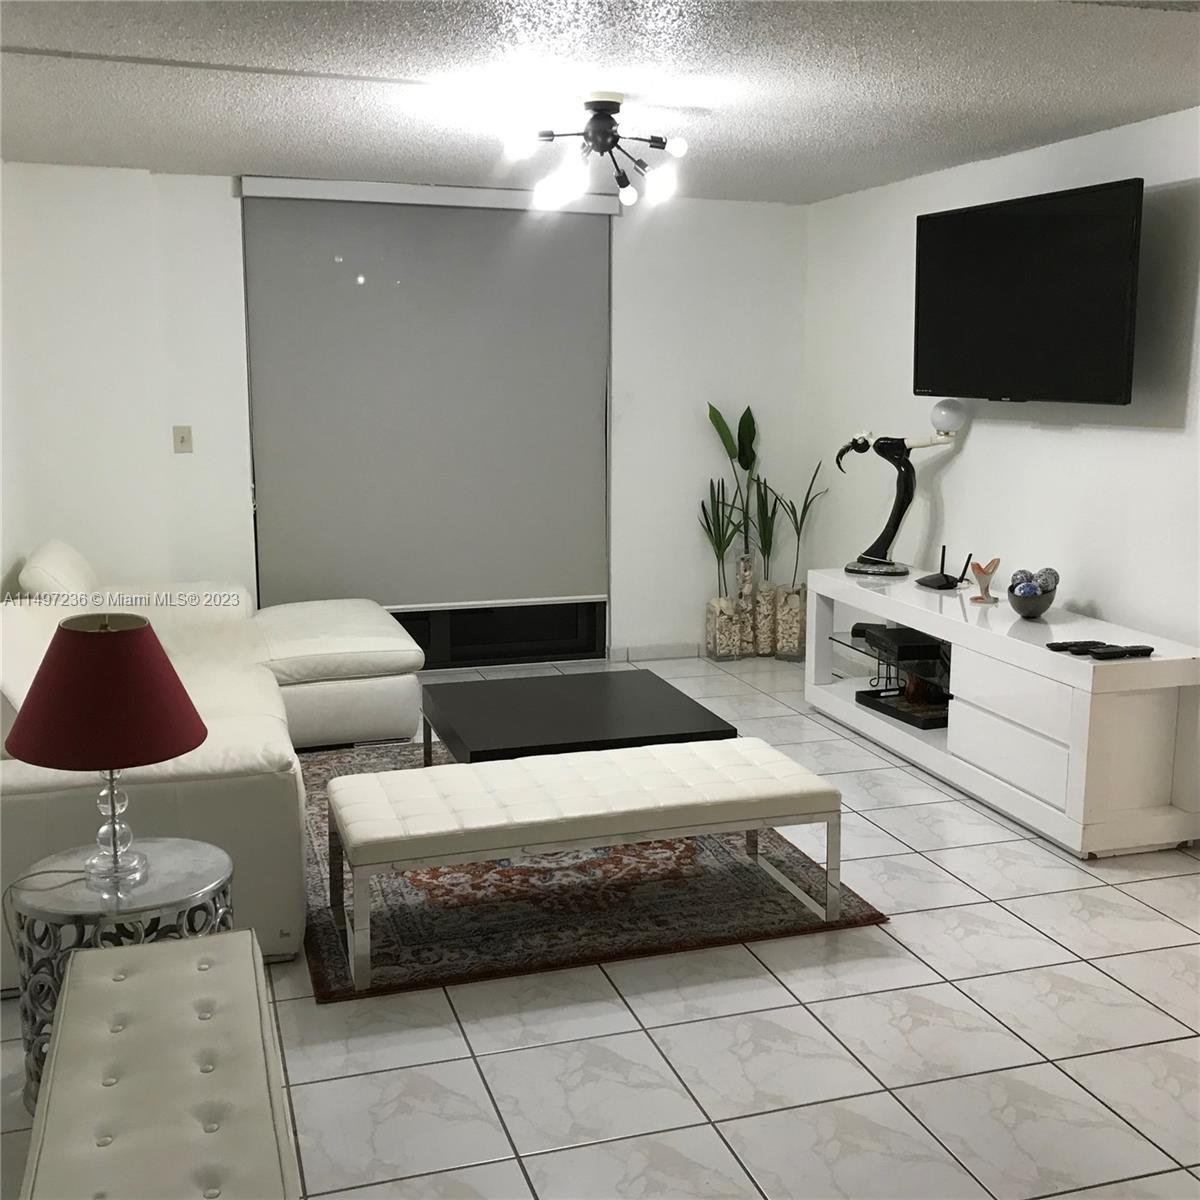 Rental Property at 1621 Collins Ave 707, Miami Beach, Miami-Dade County, Florida - Bedrooms: 2 
Bathrooms: 2  - $4,800 MO.